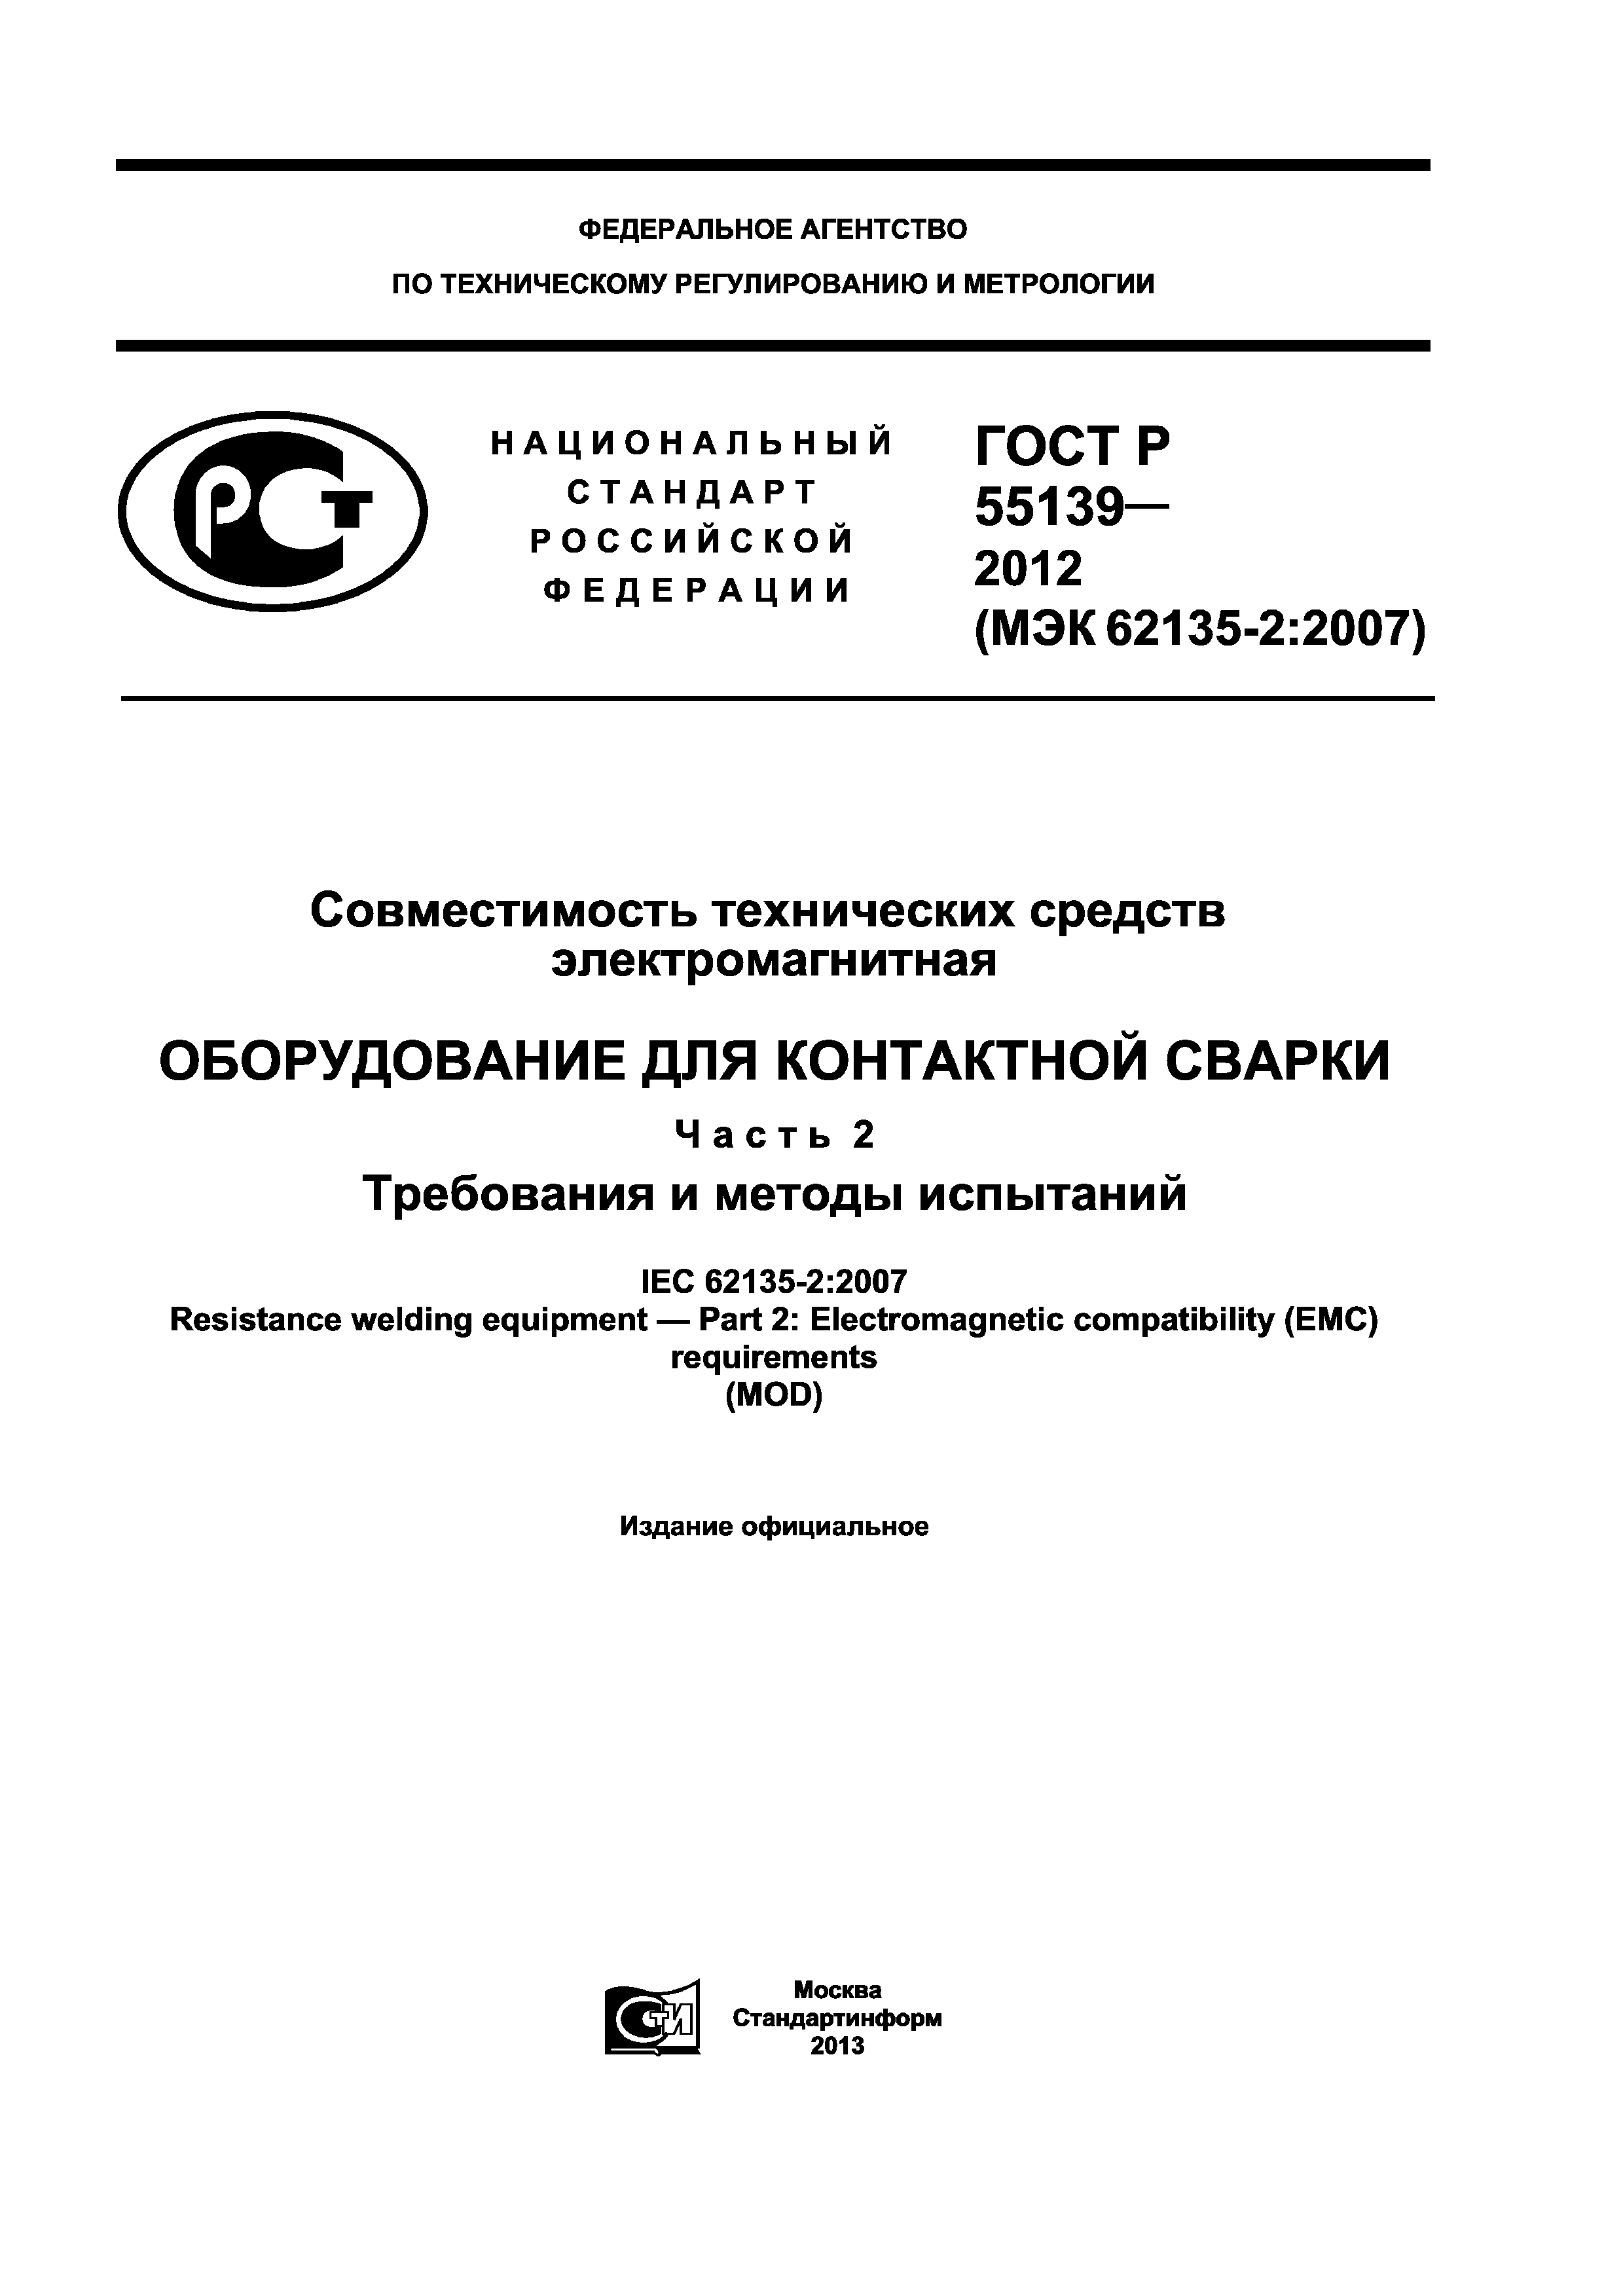 ГОСТ Р 55139-2012